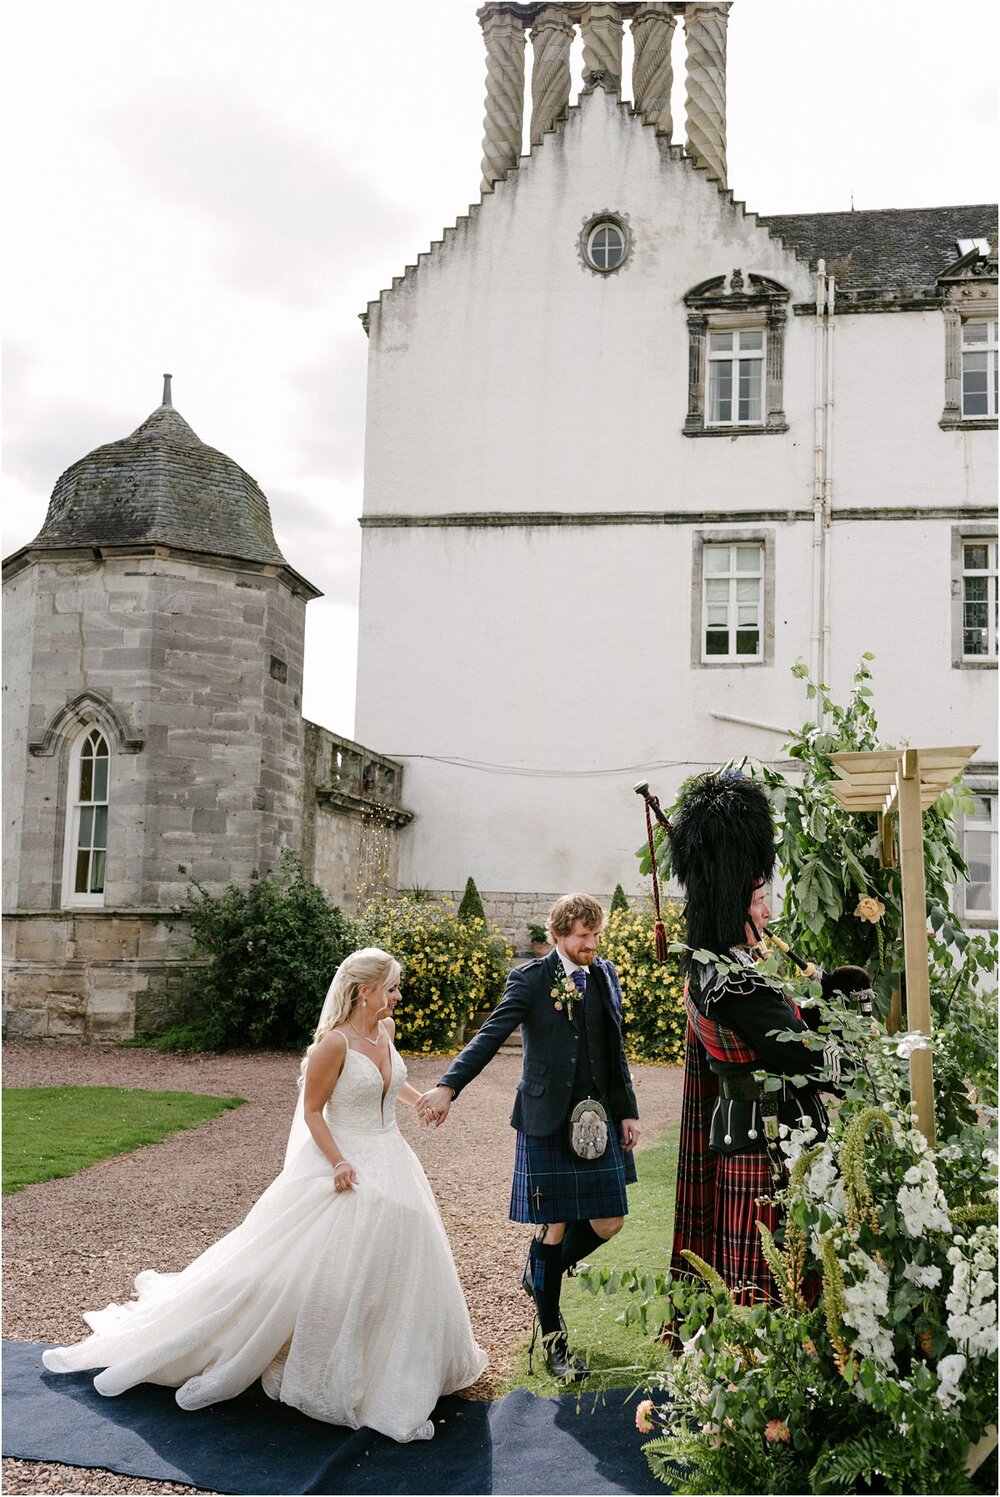  A young couple entering their wedding party at a summer wedding at Winton castle 